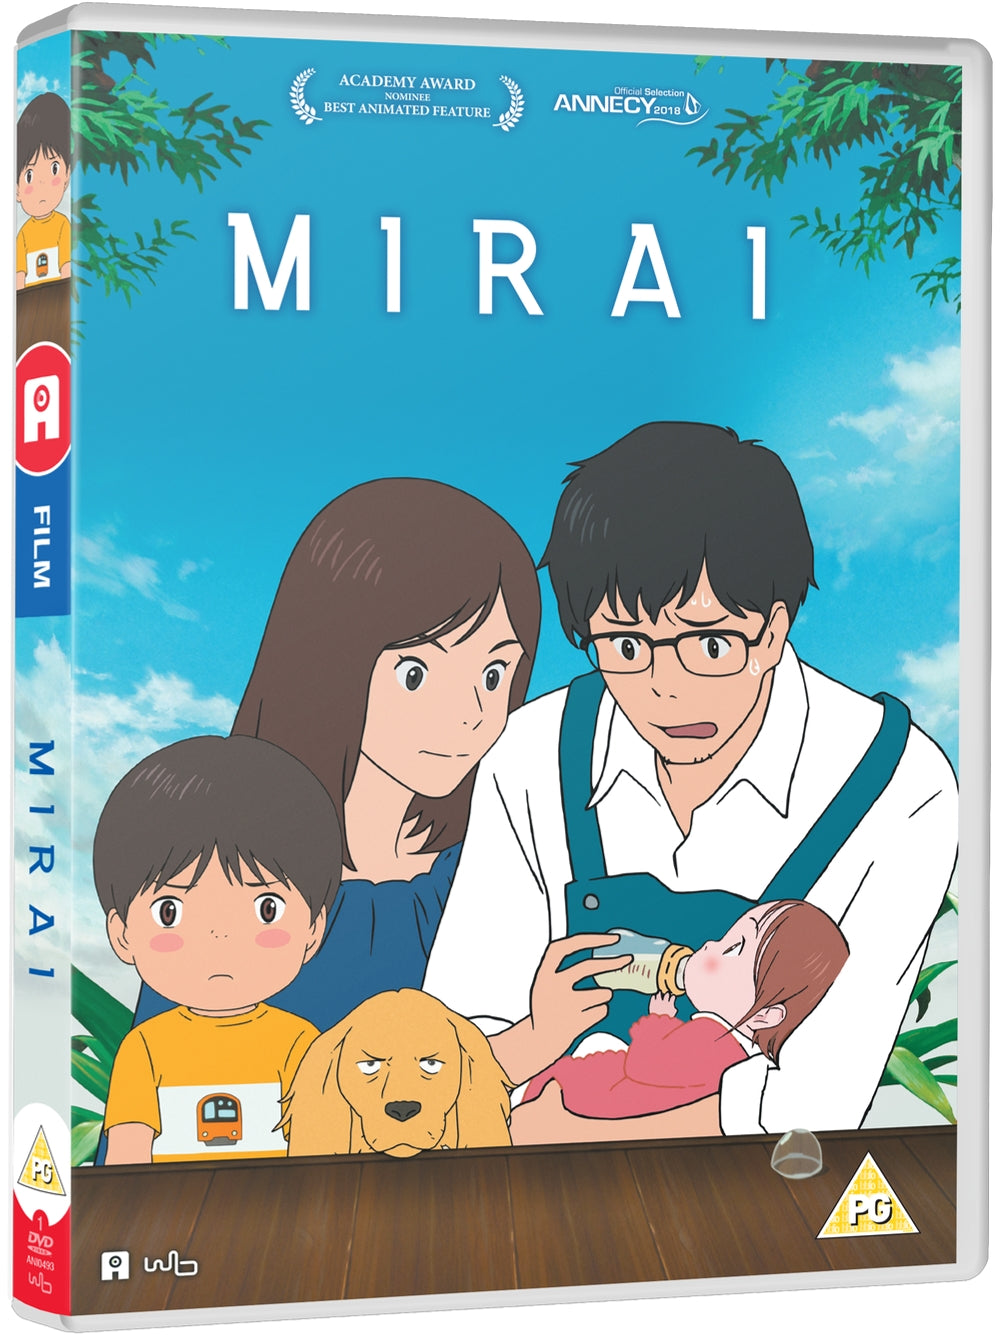 MIRAI NO MIRAI Official US Release Trailer (2018) English Sub Anime Movie  HD - YouTube